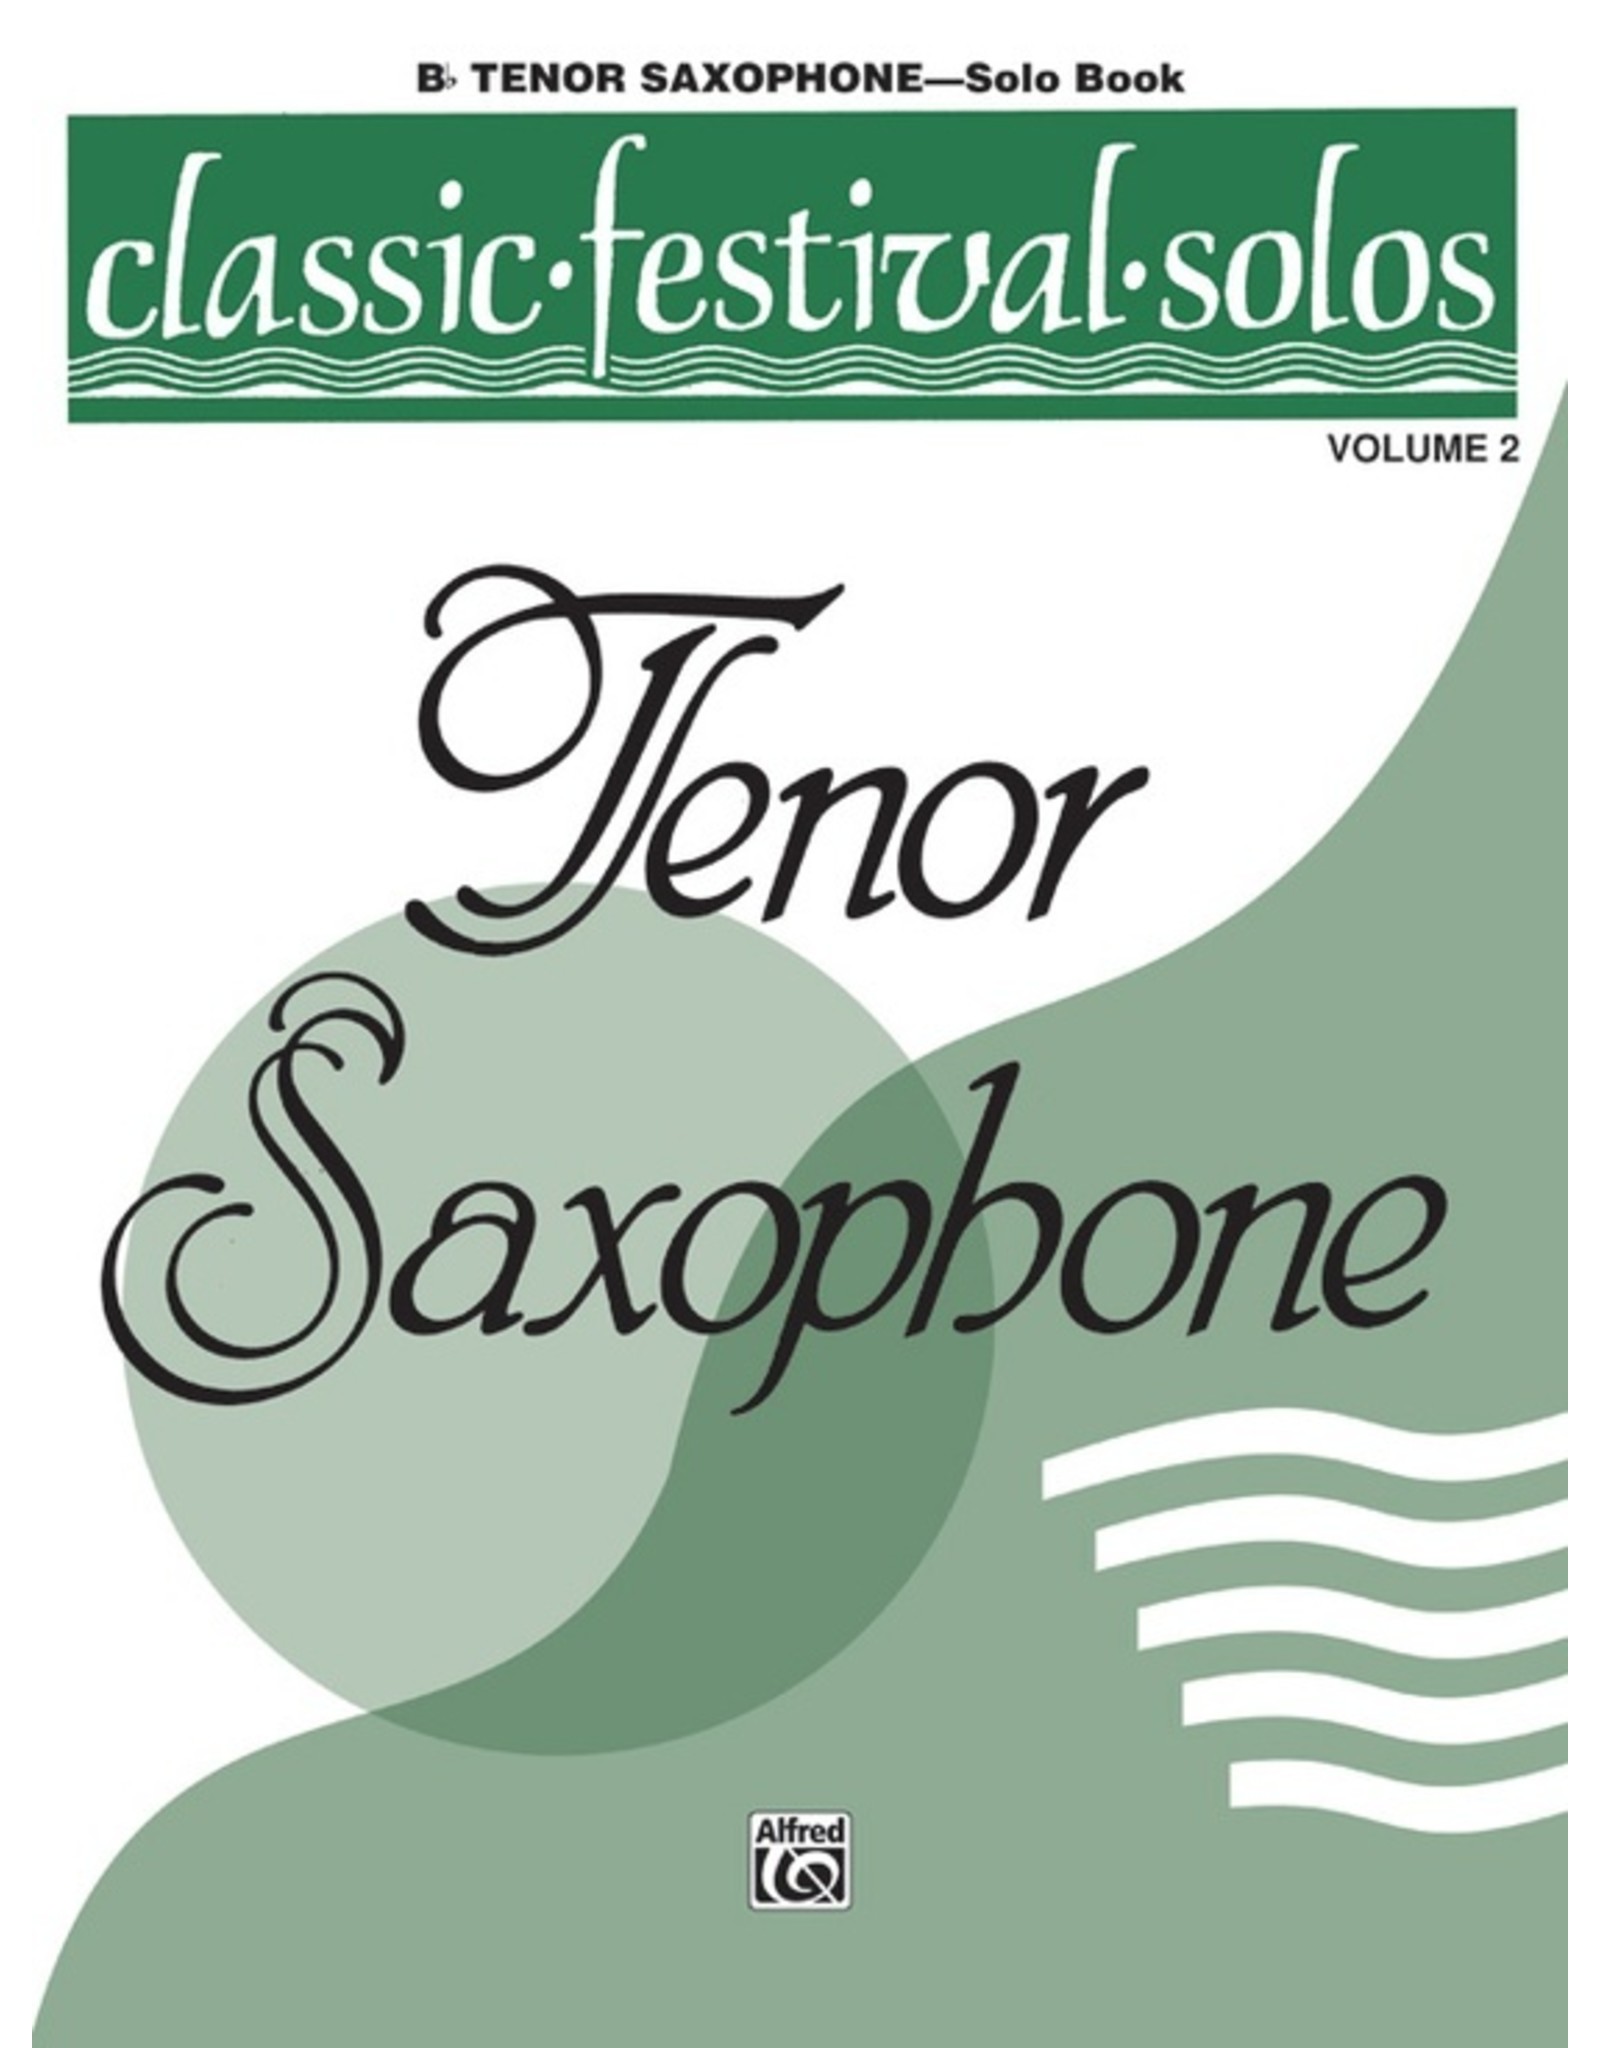 Alfred Classic Festival Solos (B-Flat Tenor Saxophone), Volume 2 Solo Book